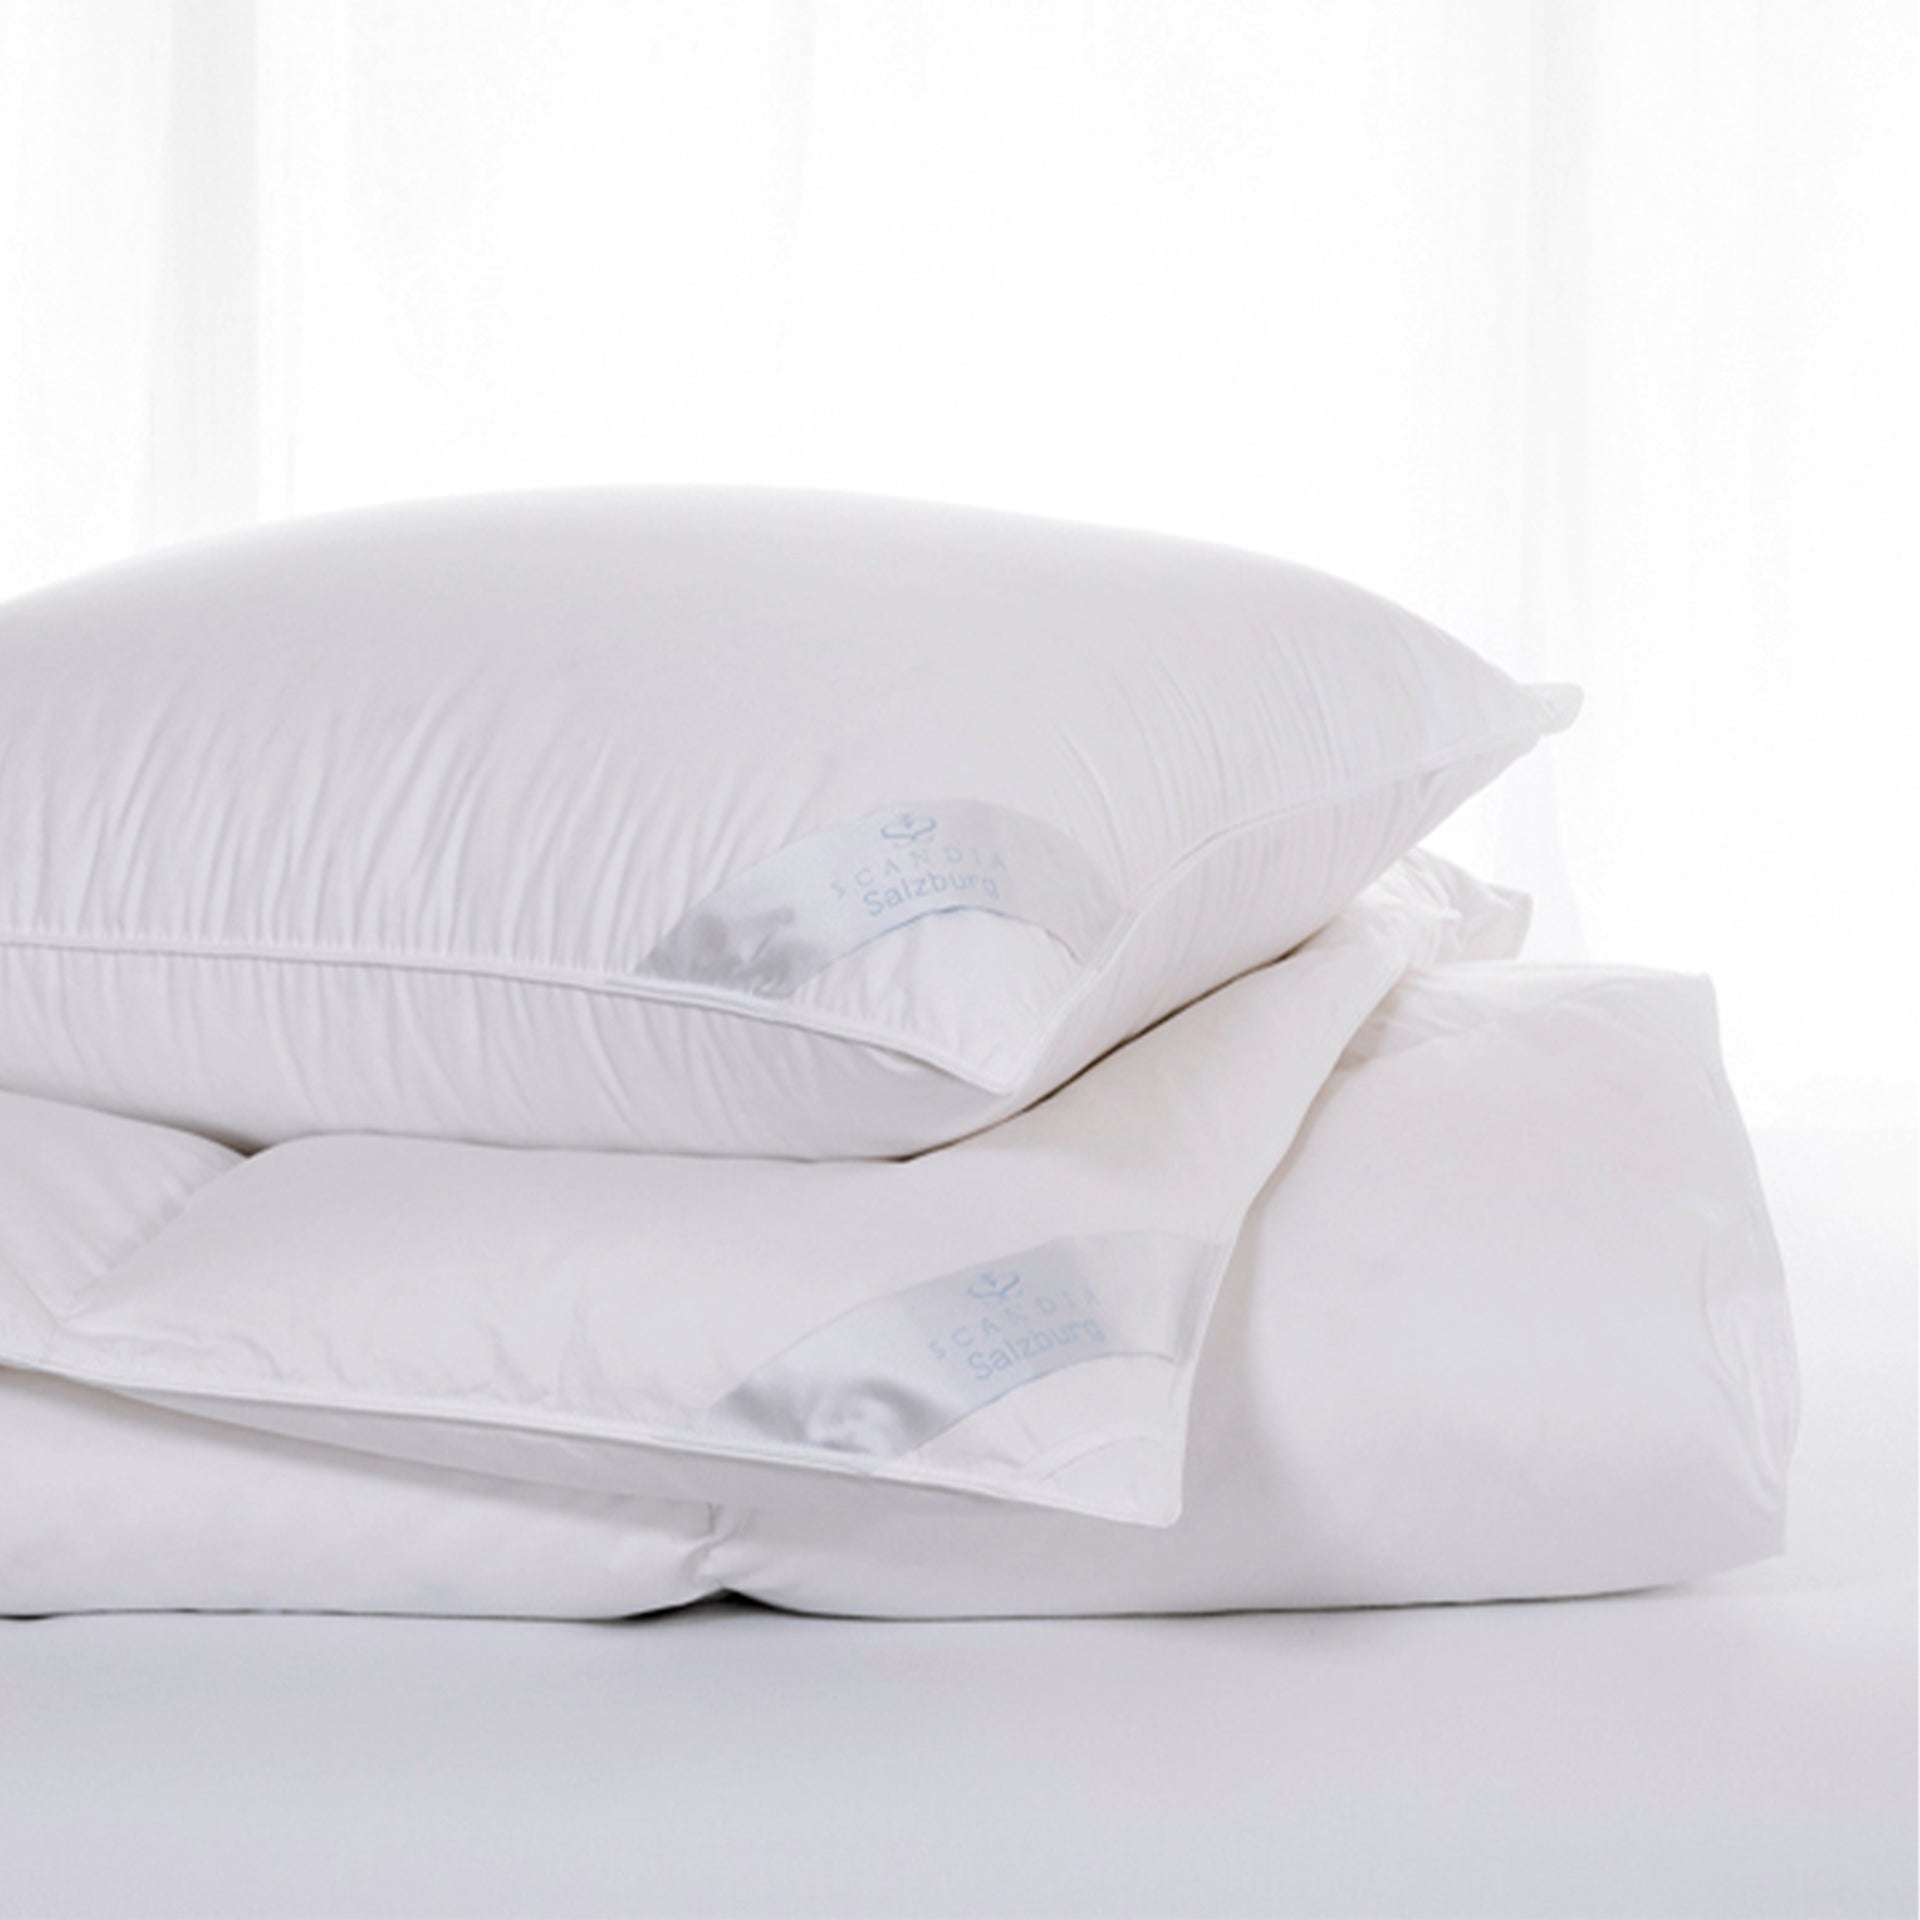 scandia home salzburg comforter folded with salzburg pillow on top